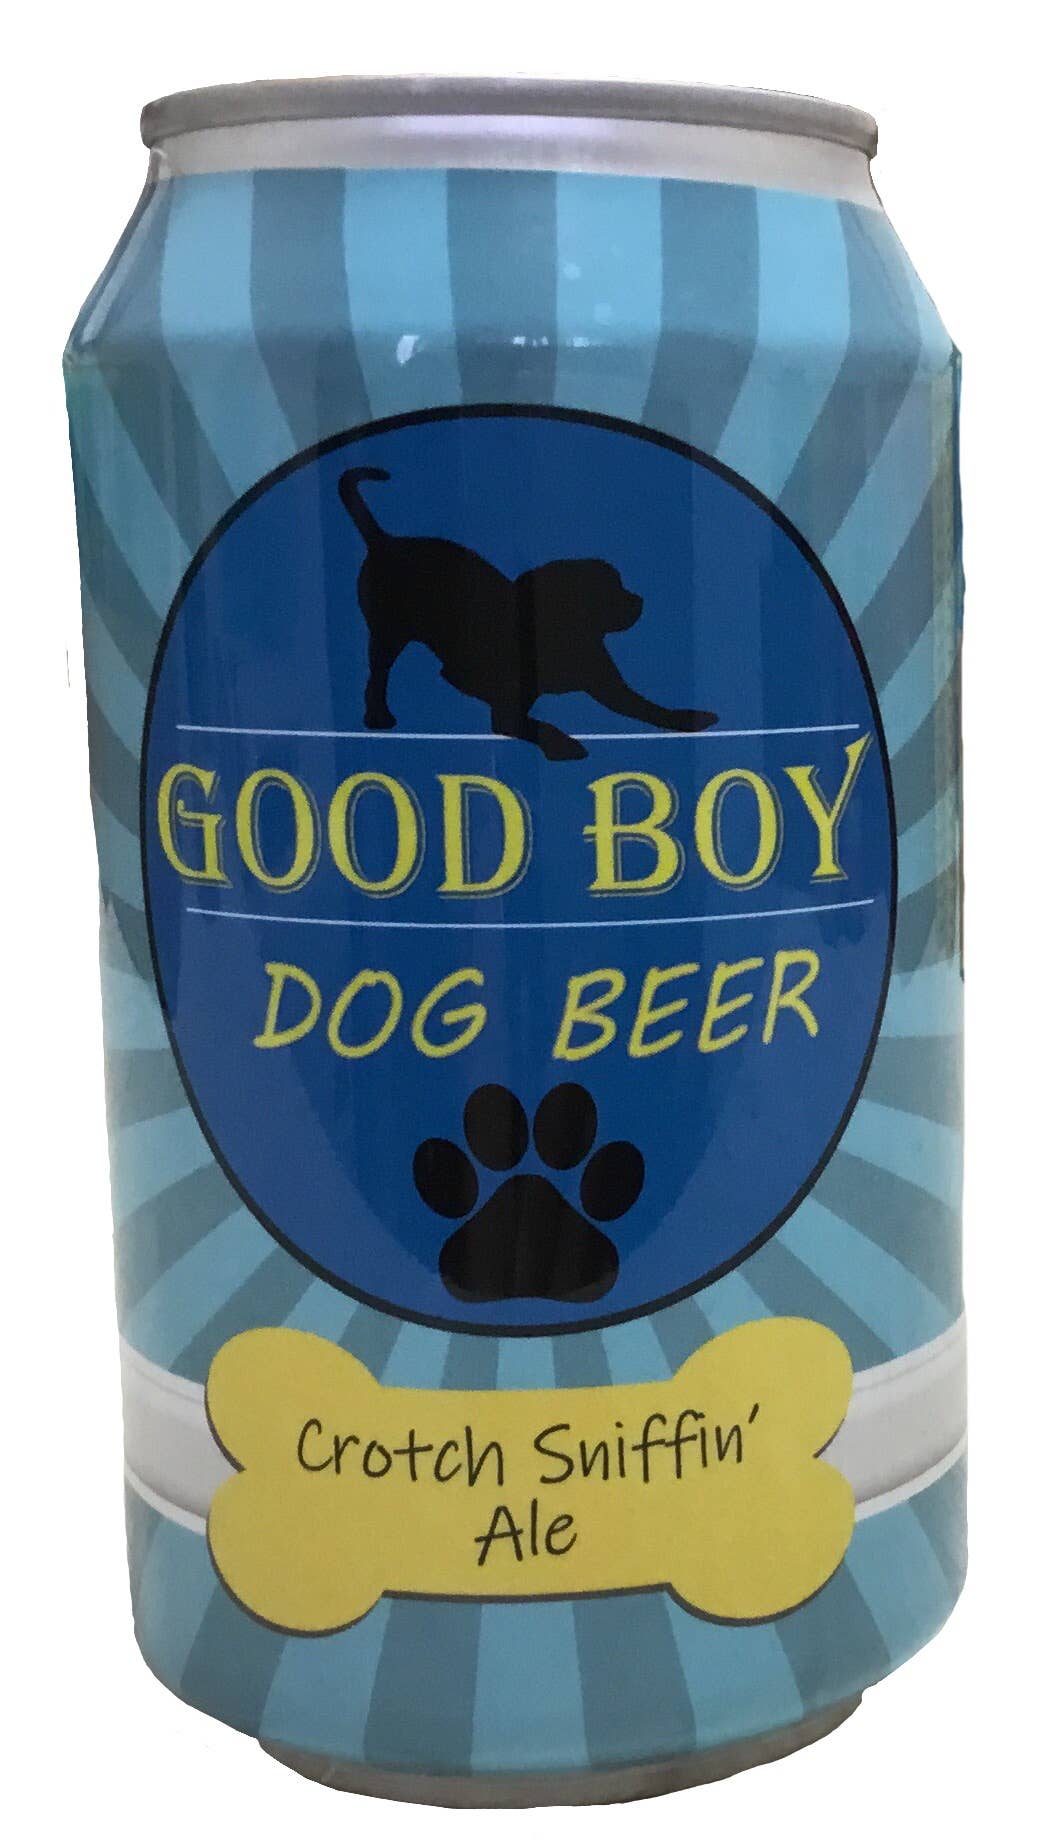 Good Boy Dog Beer Crotch Sniffin Ale